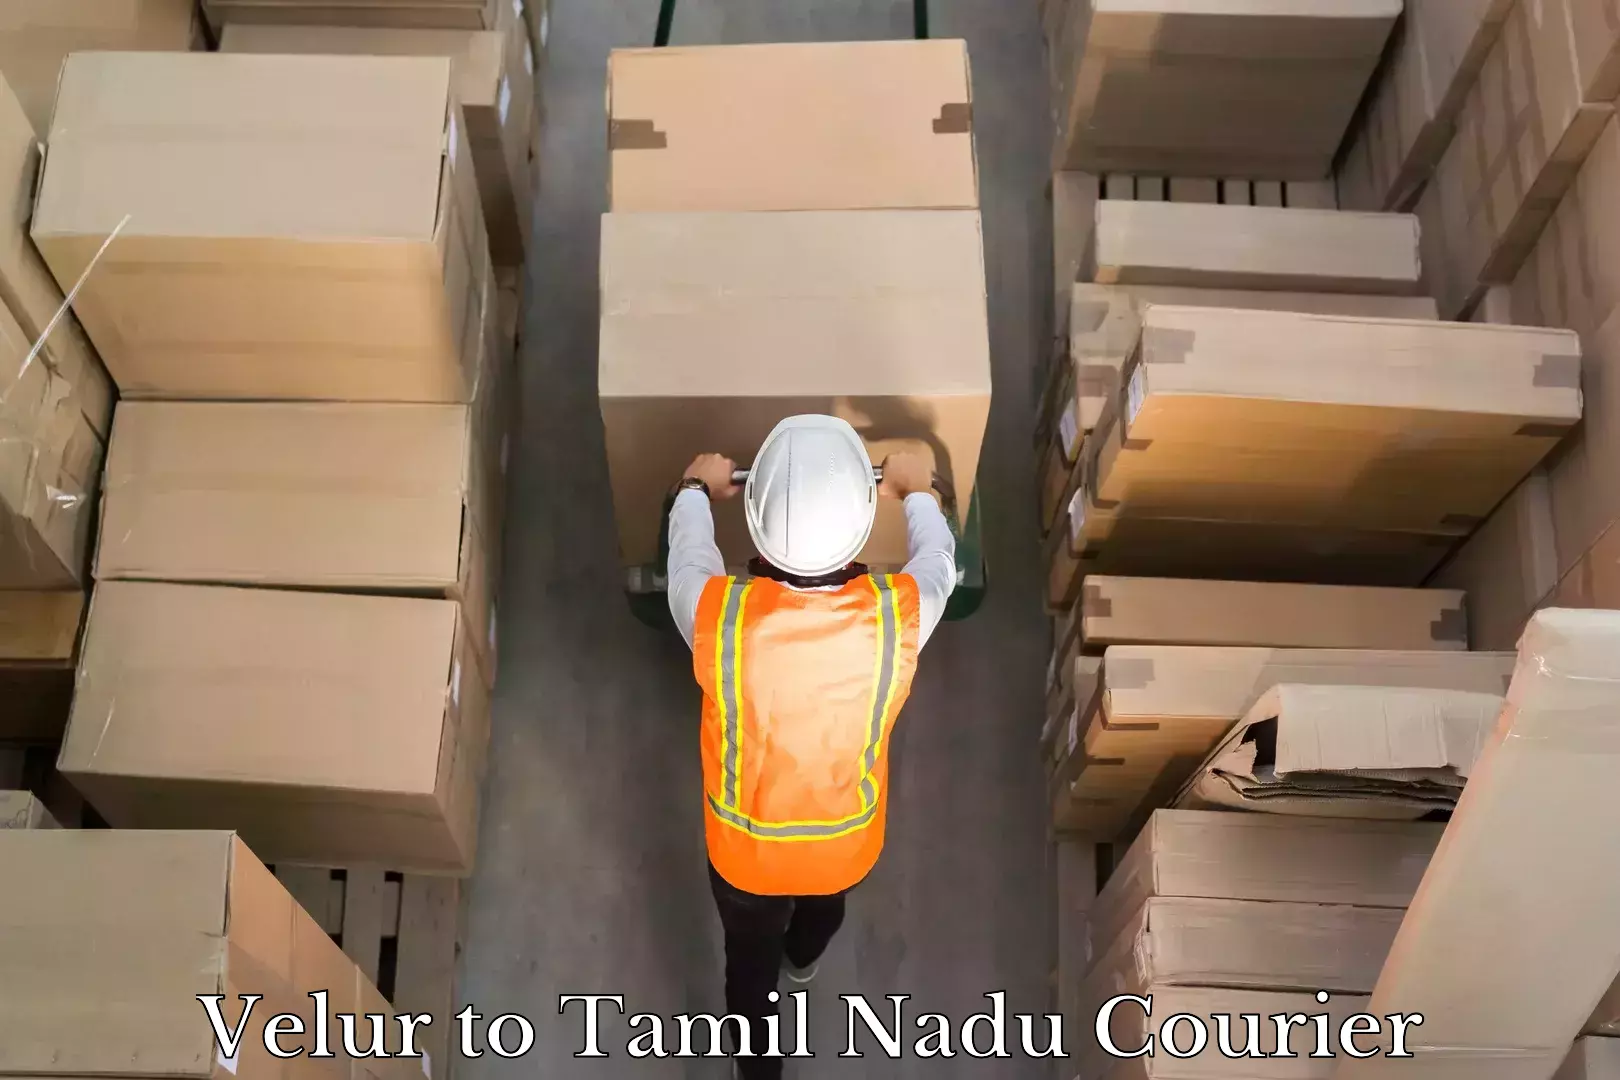 Logistics service provider Velur to Tamil Nadu